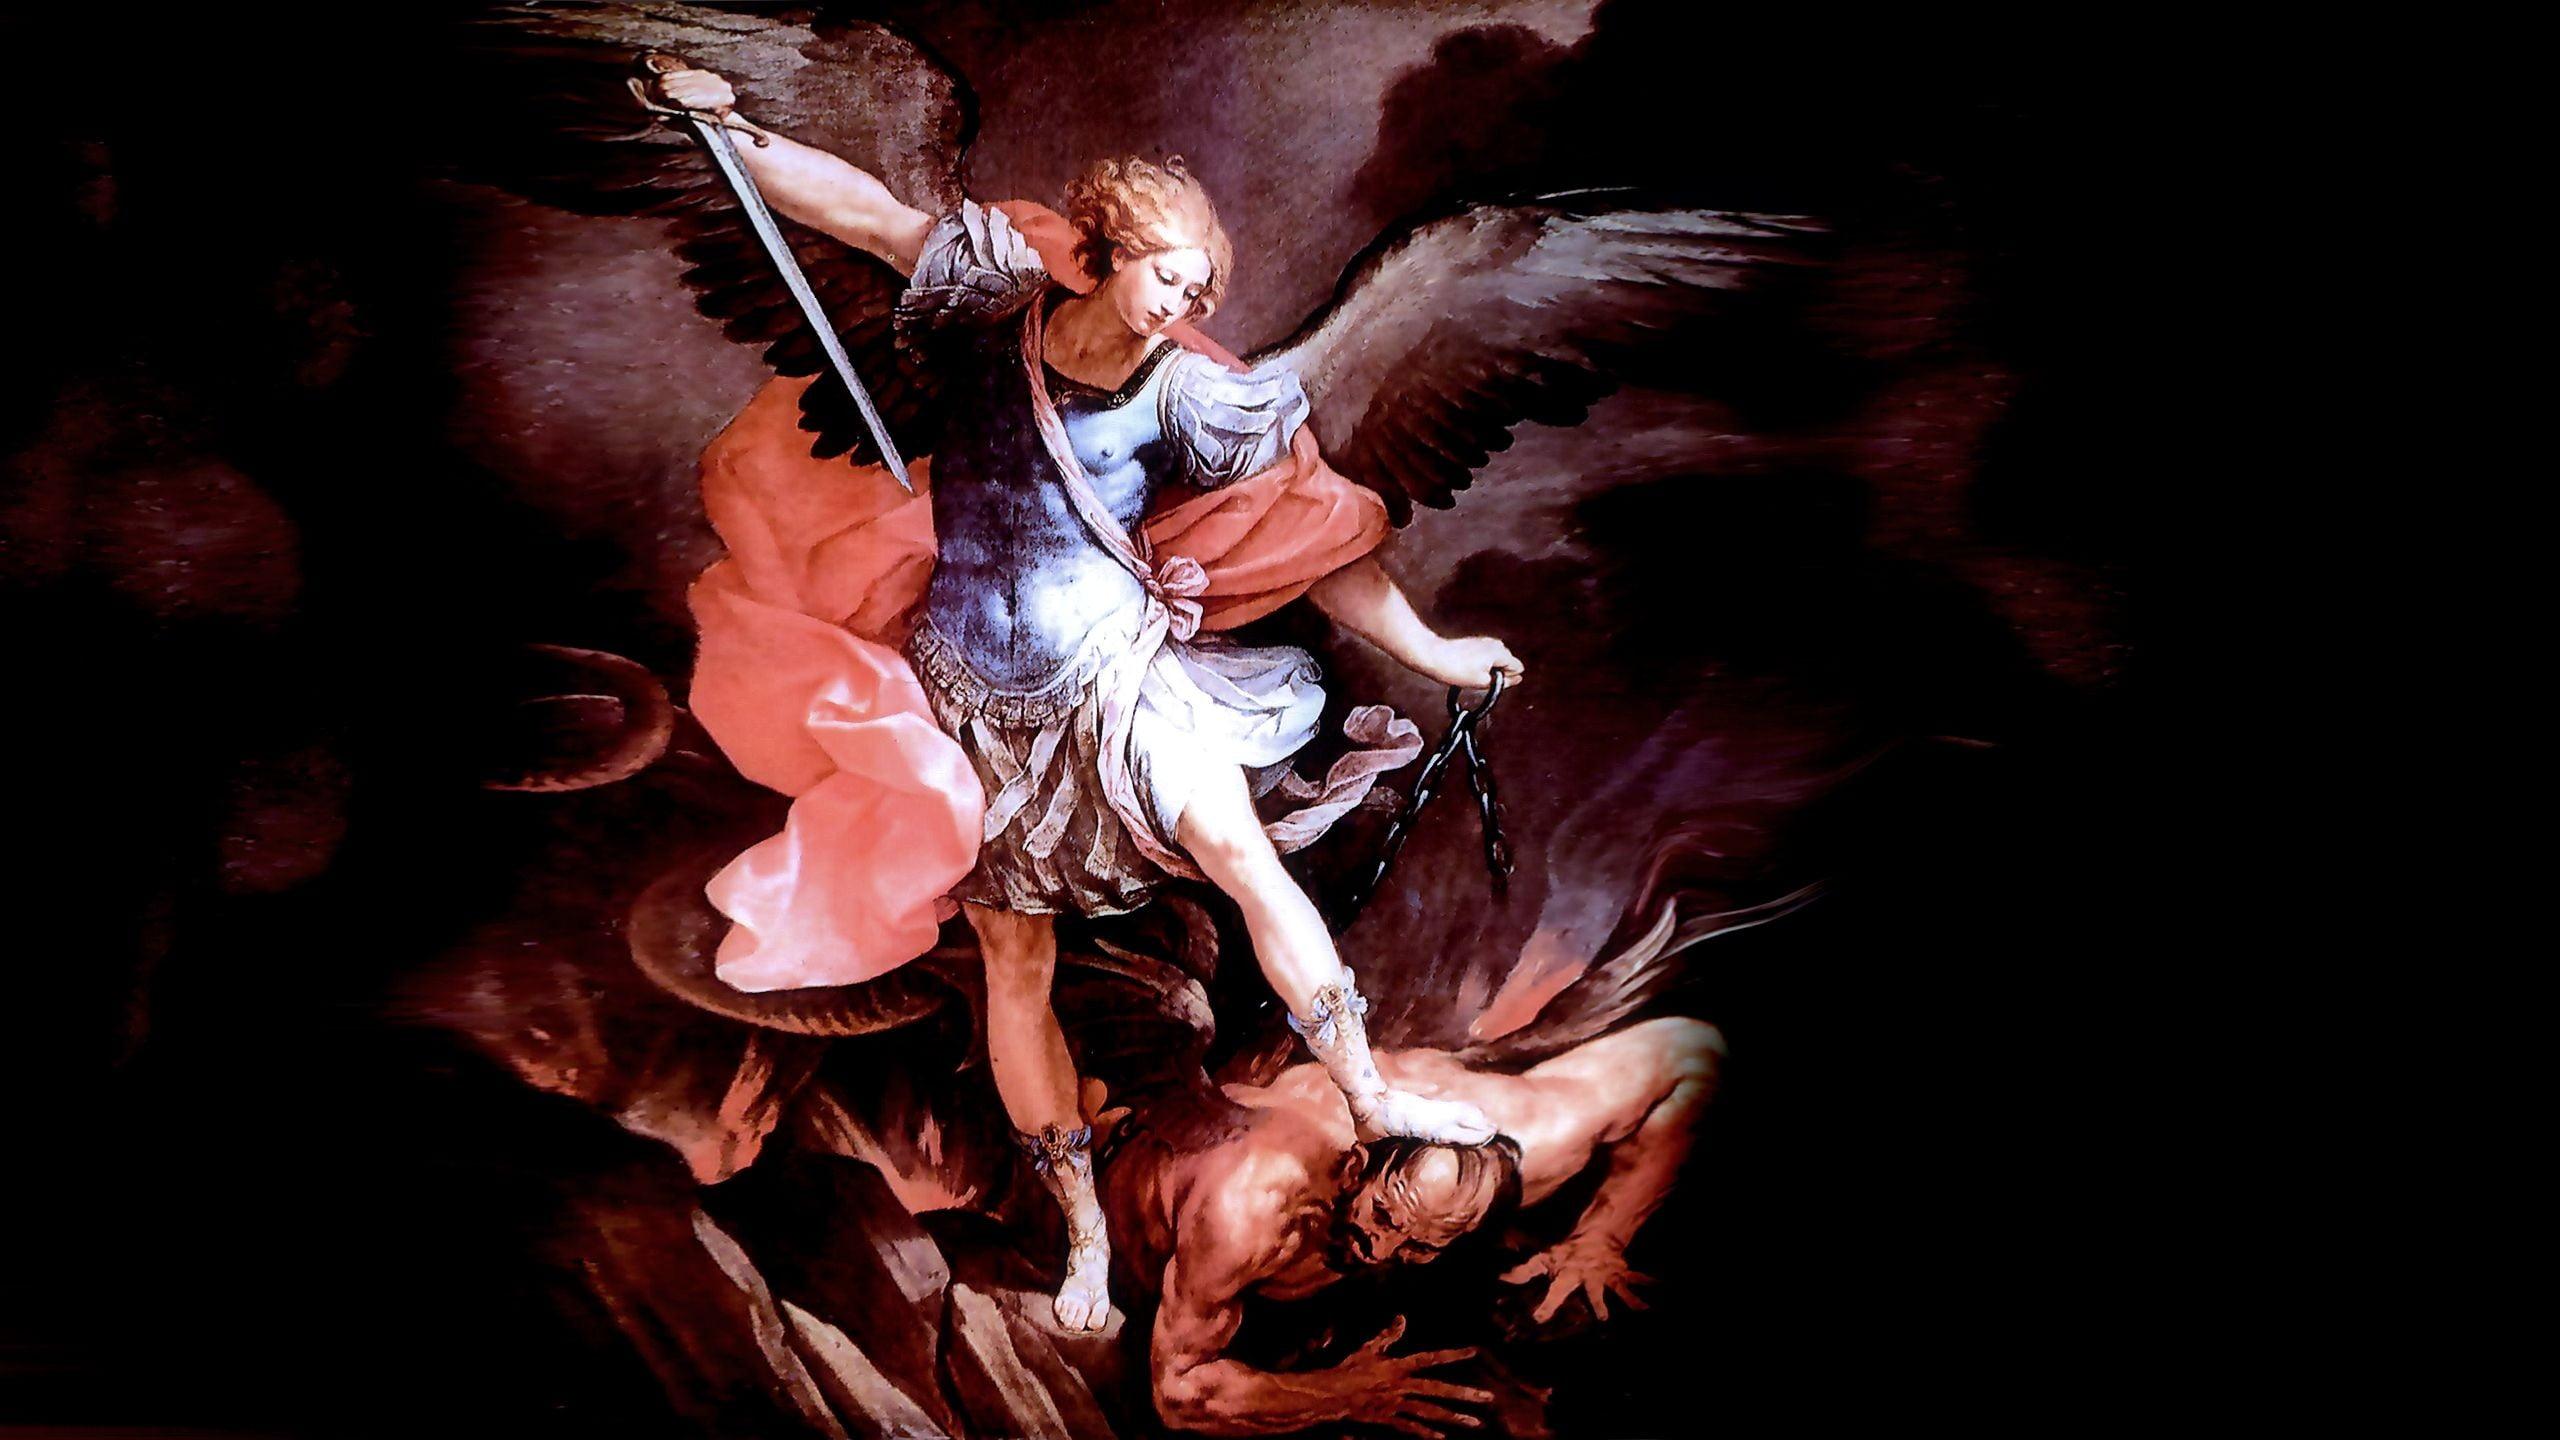 Angel vs devil illustration, angel, religion, fantasy art